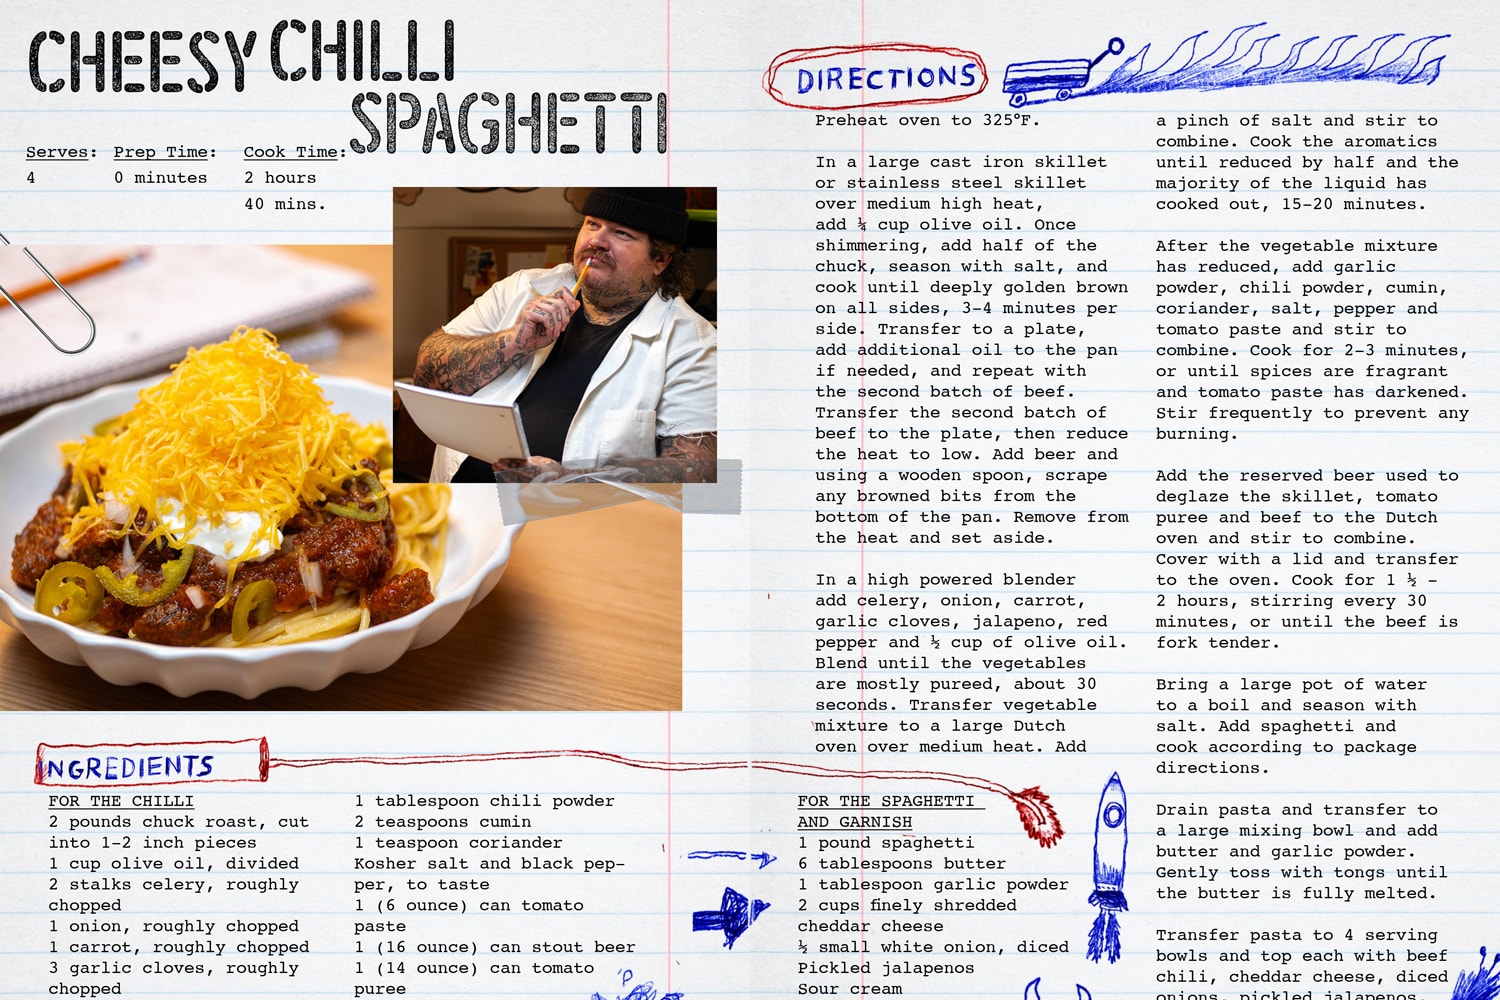 WeTransfer Matty Matheson 'Cookin' Somethin' for College' Free Digital Cookbook Info